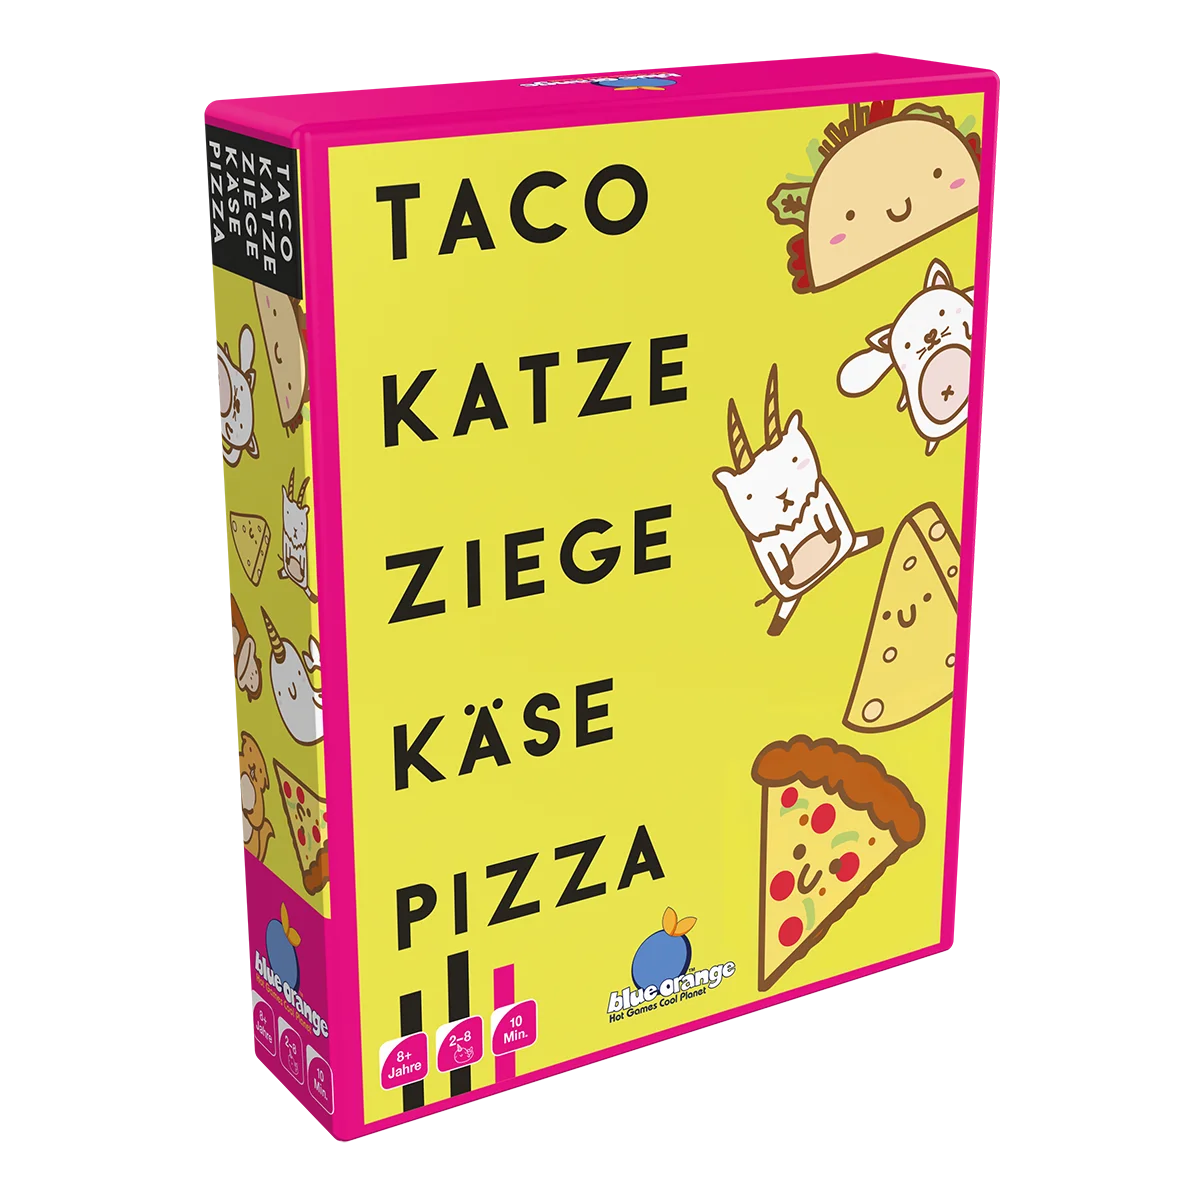 Taco Katze Ziege Kaese Pizza 01